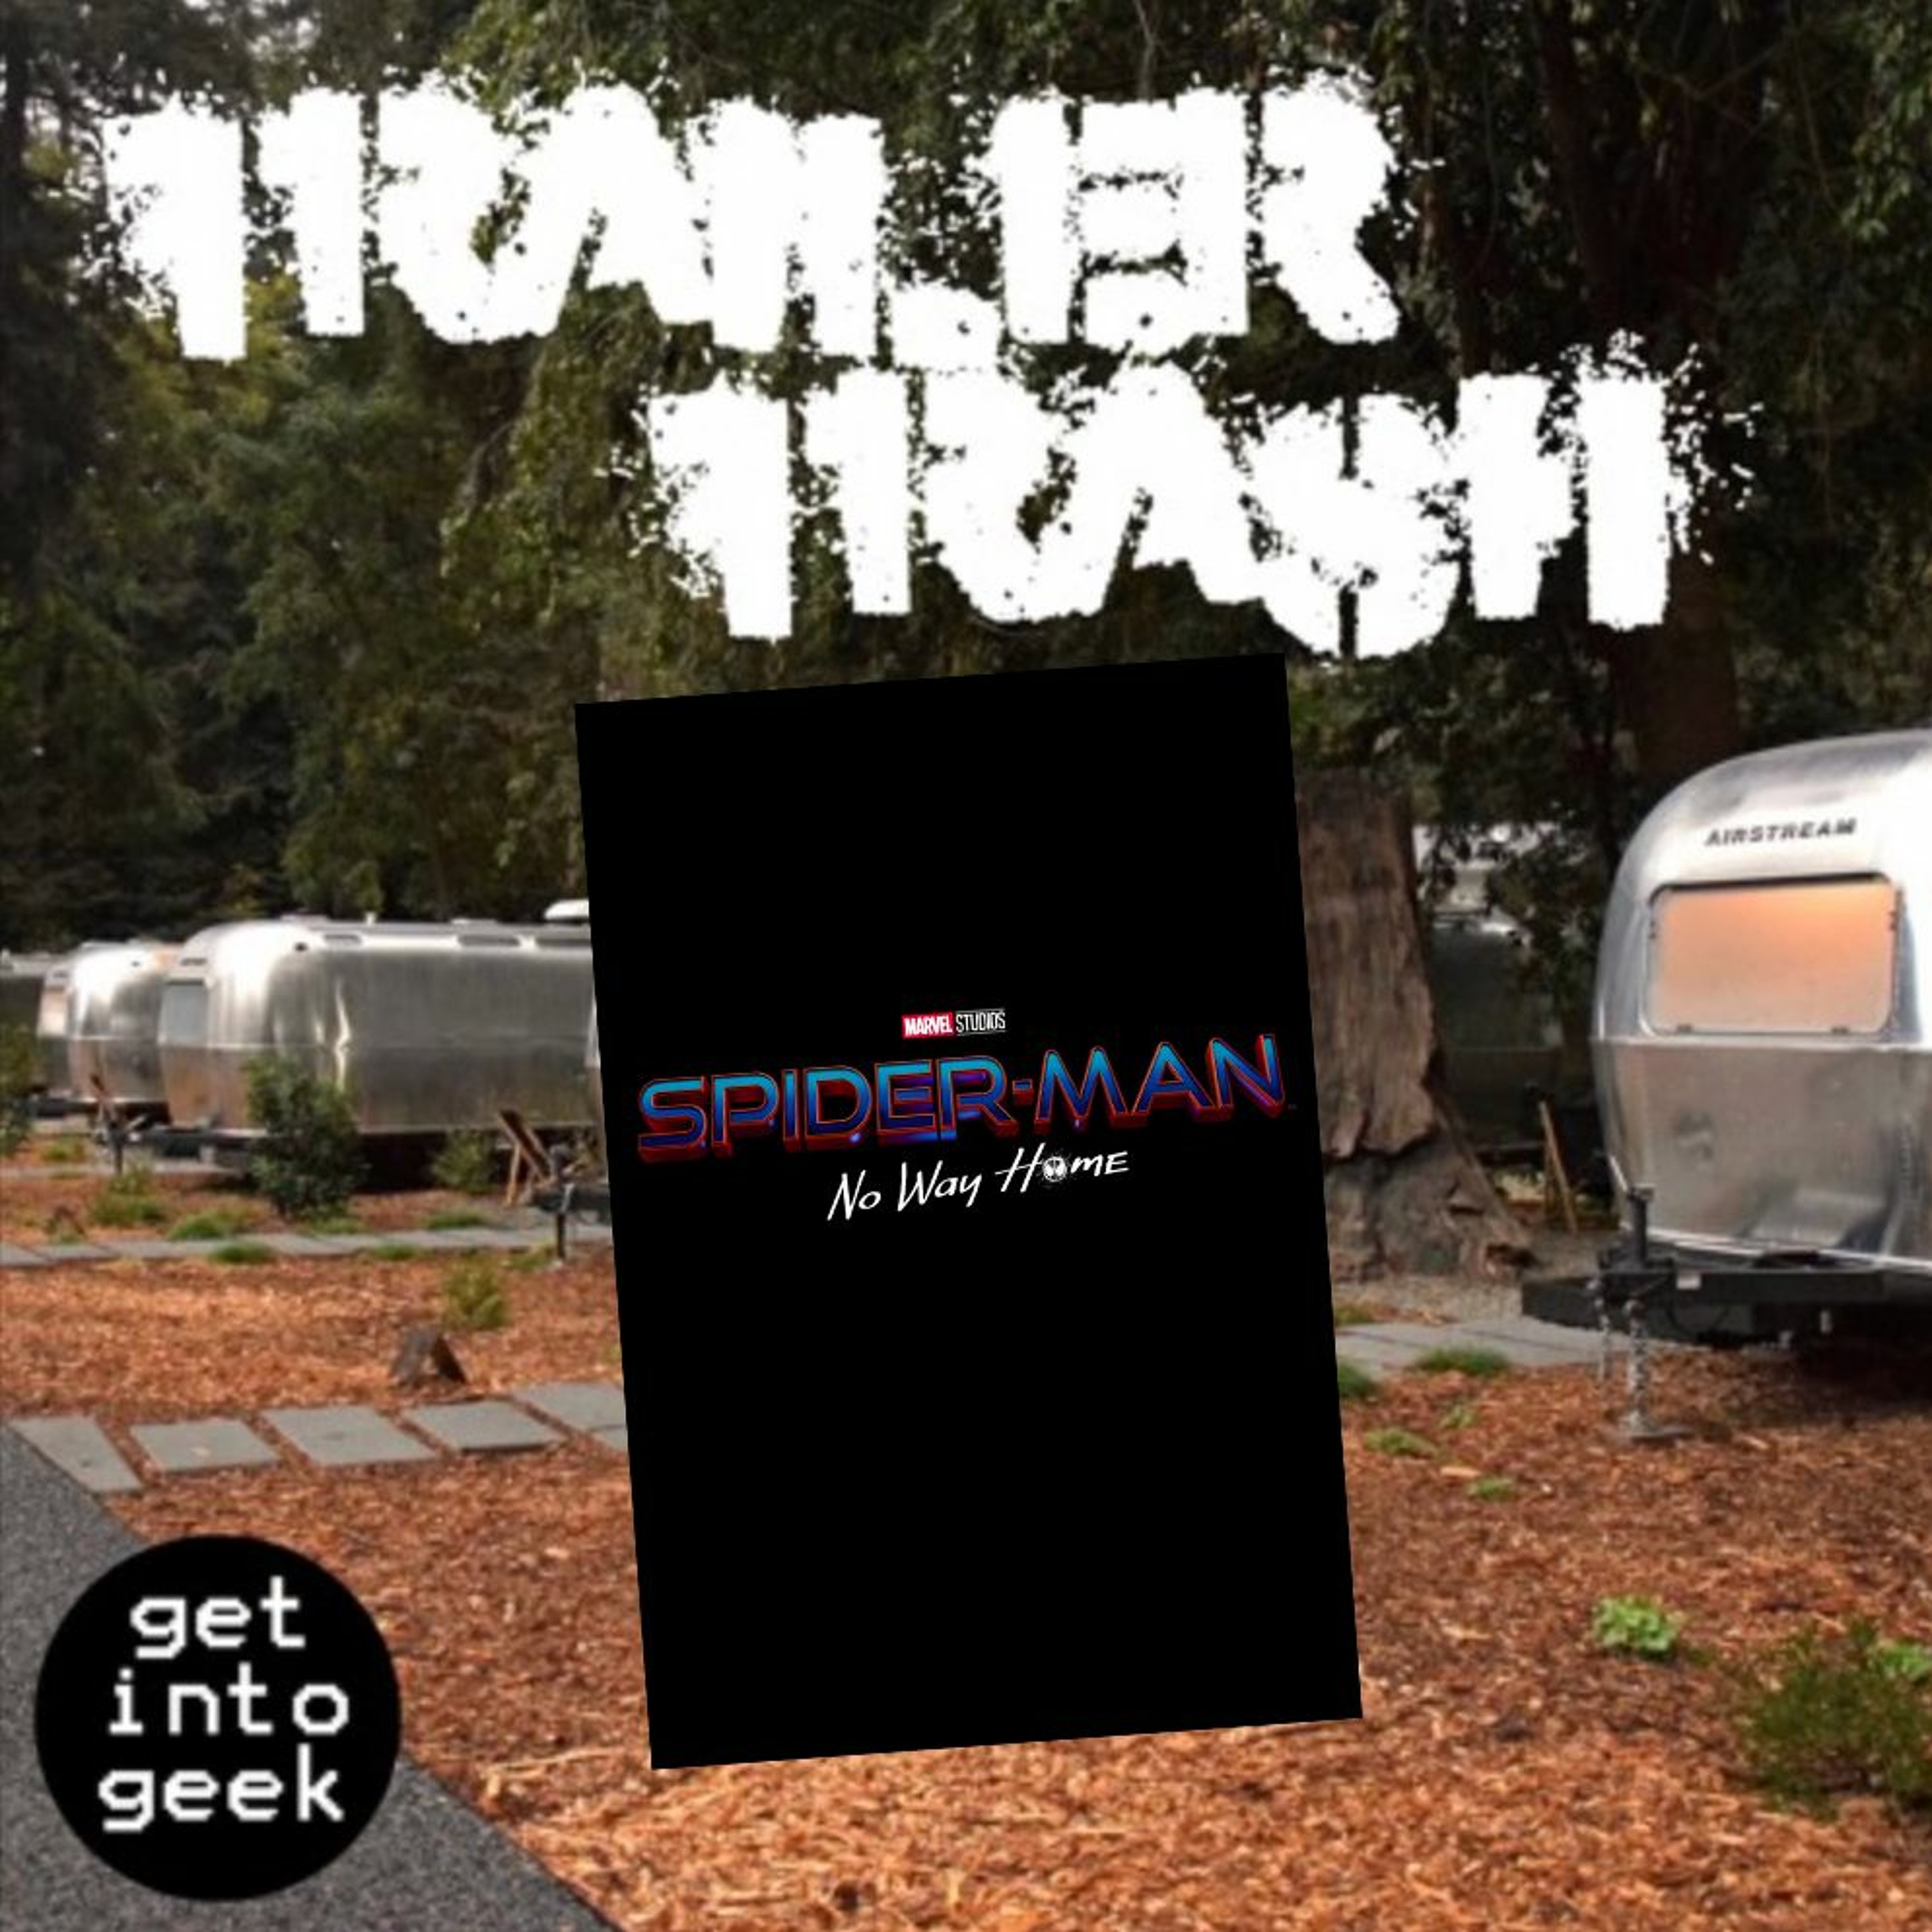 Trailer Trash Ep. 14 - Spider-Man: No Way Home